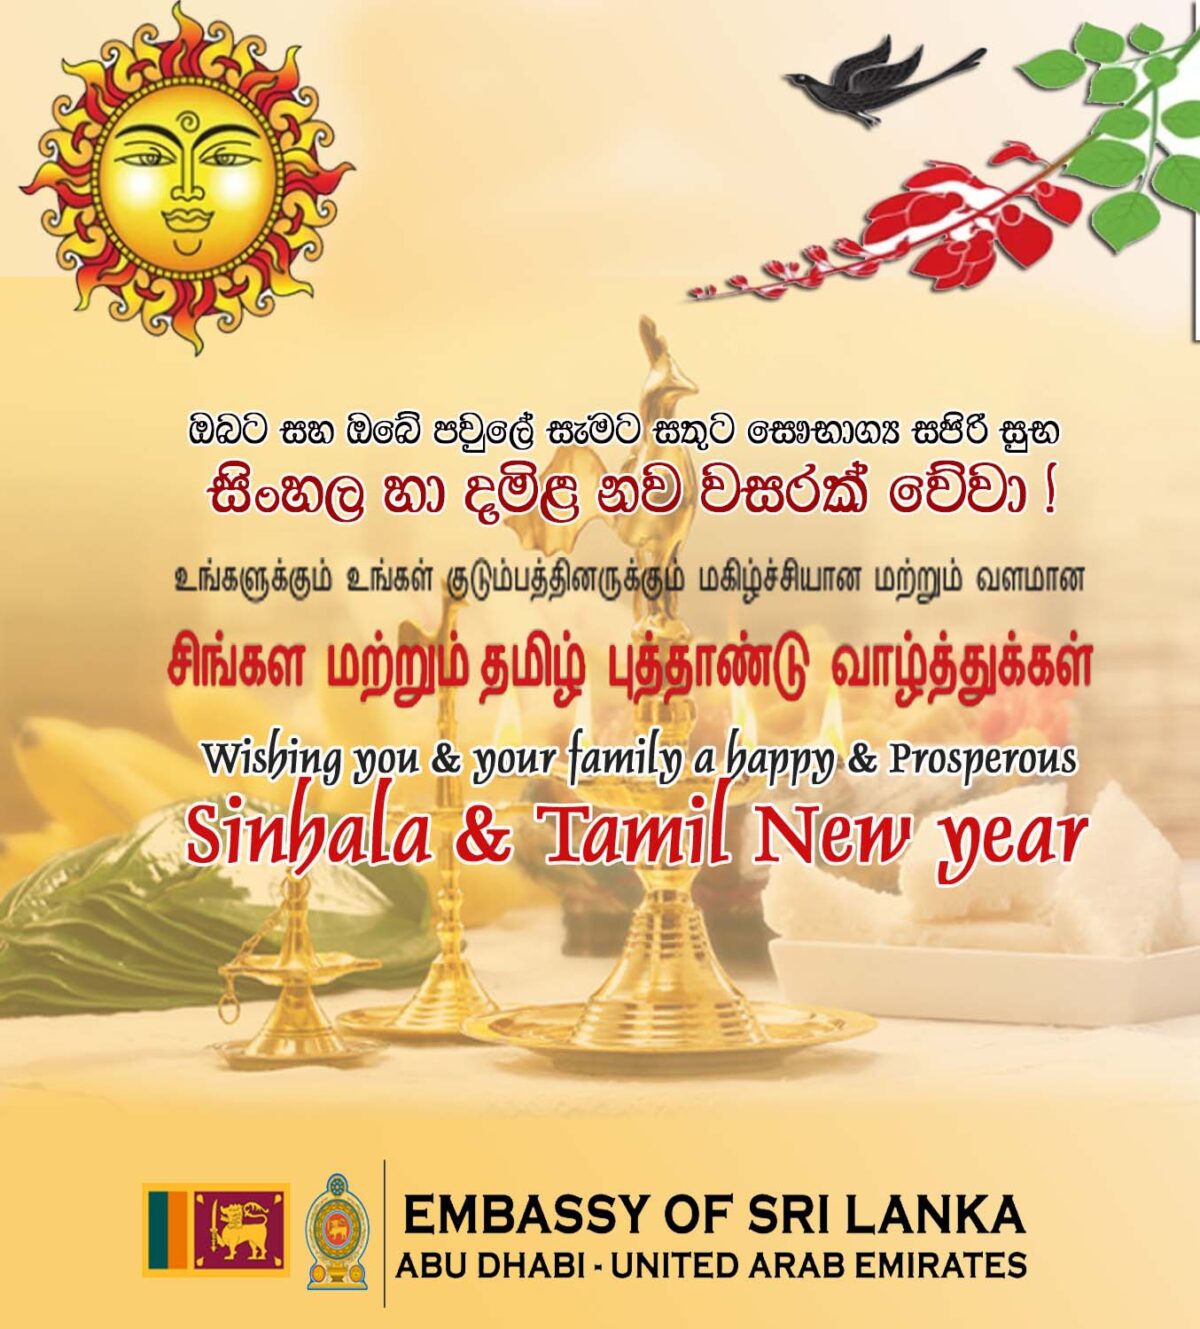 wishes for Happy Sinhala & Tamil New year - Embassy of Sri Lanka - UAE